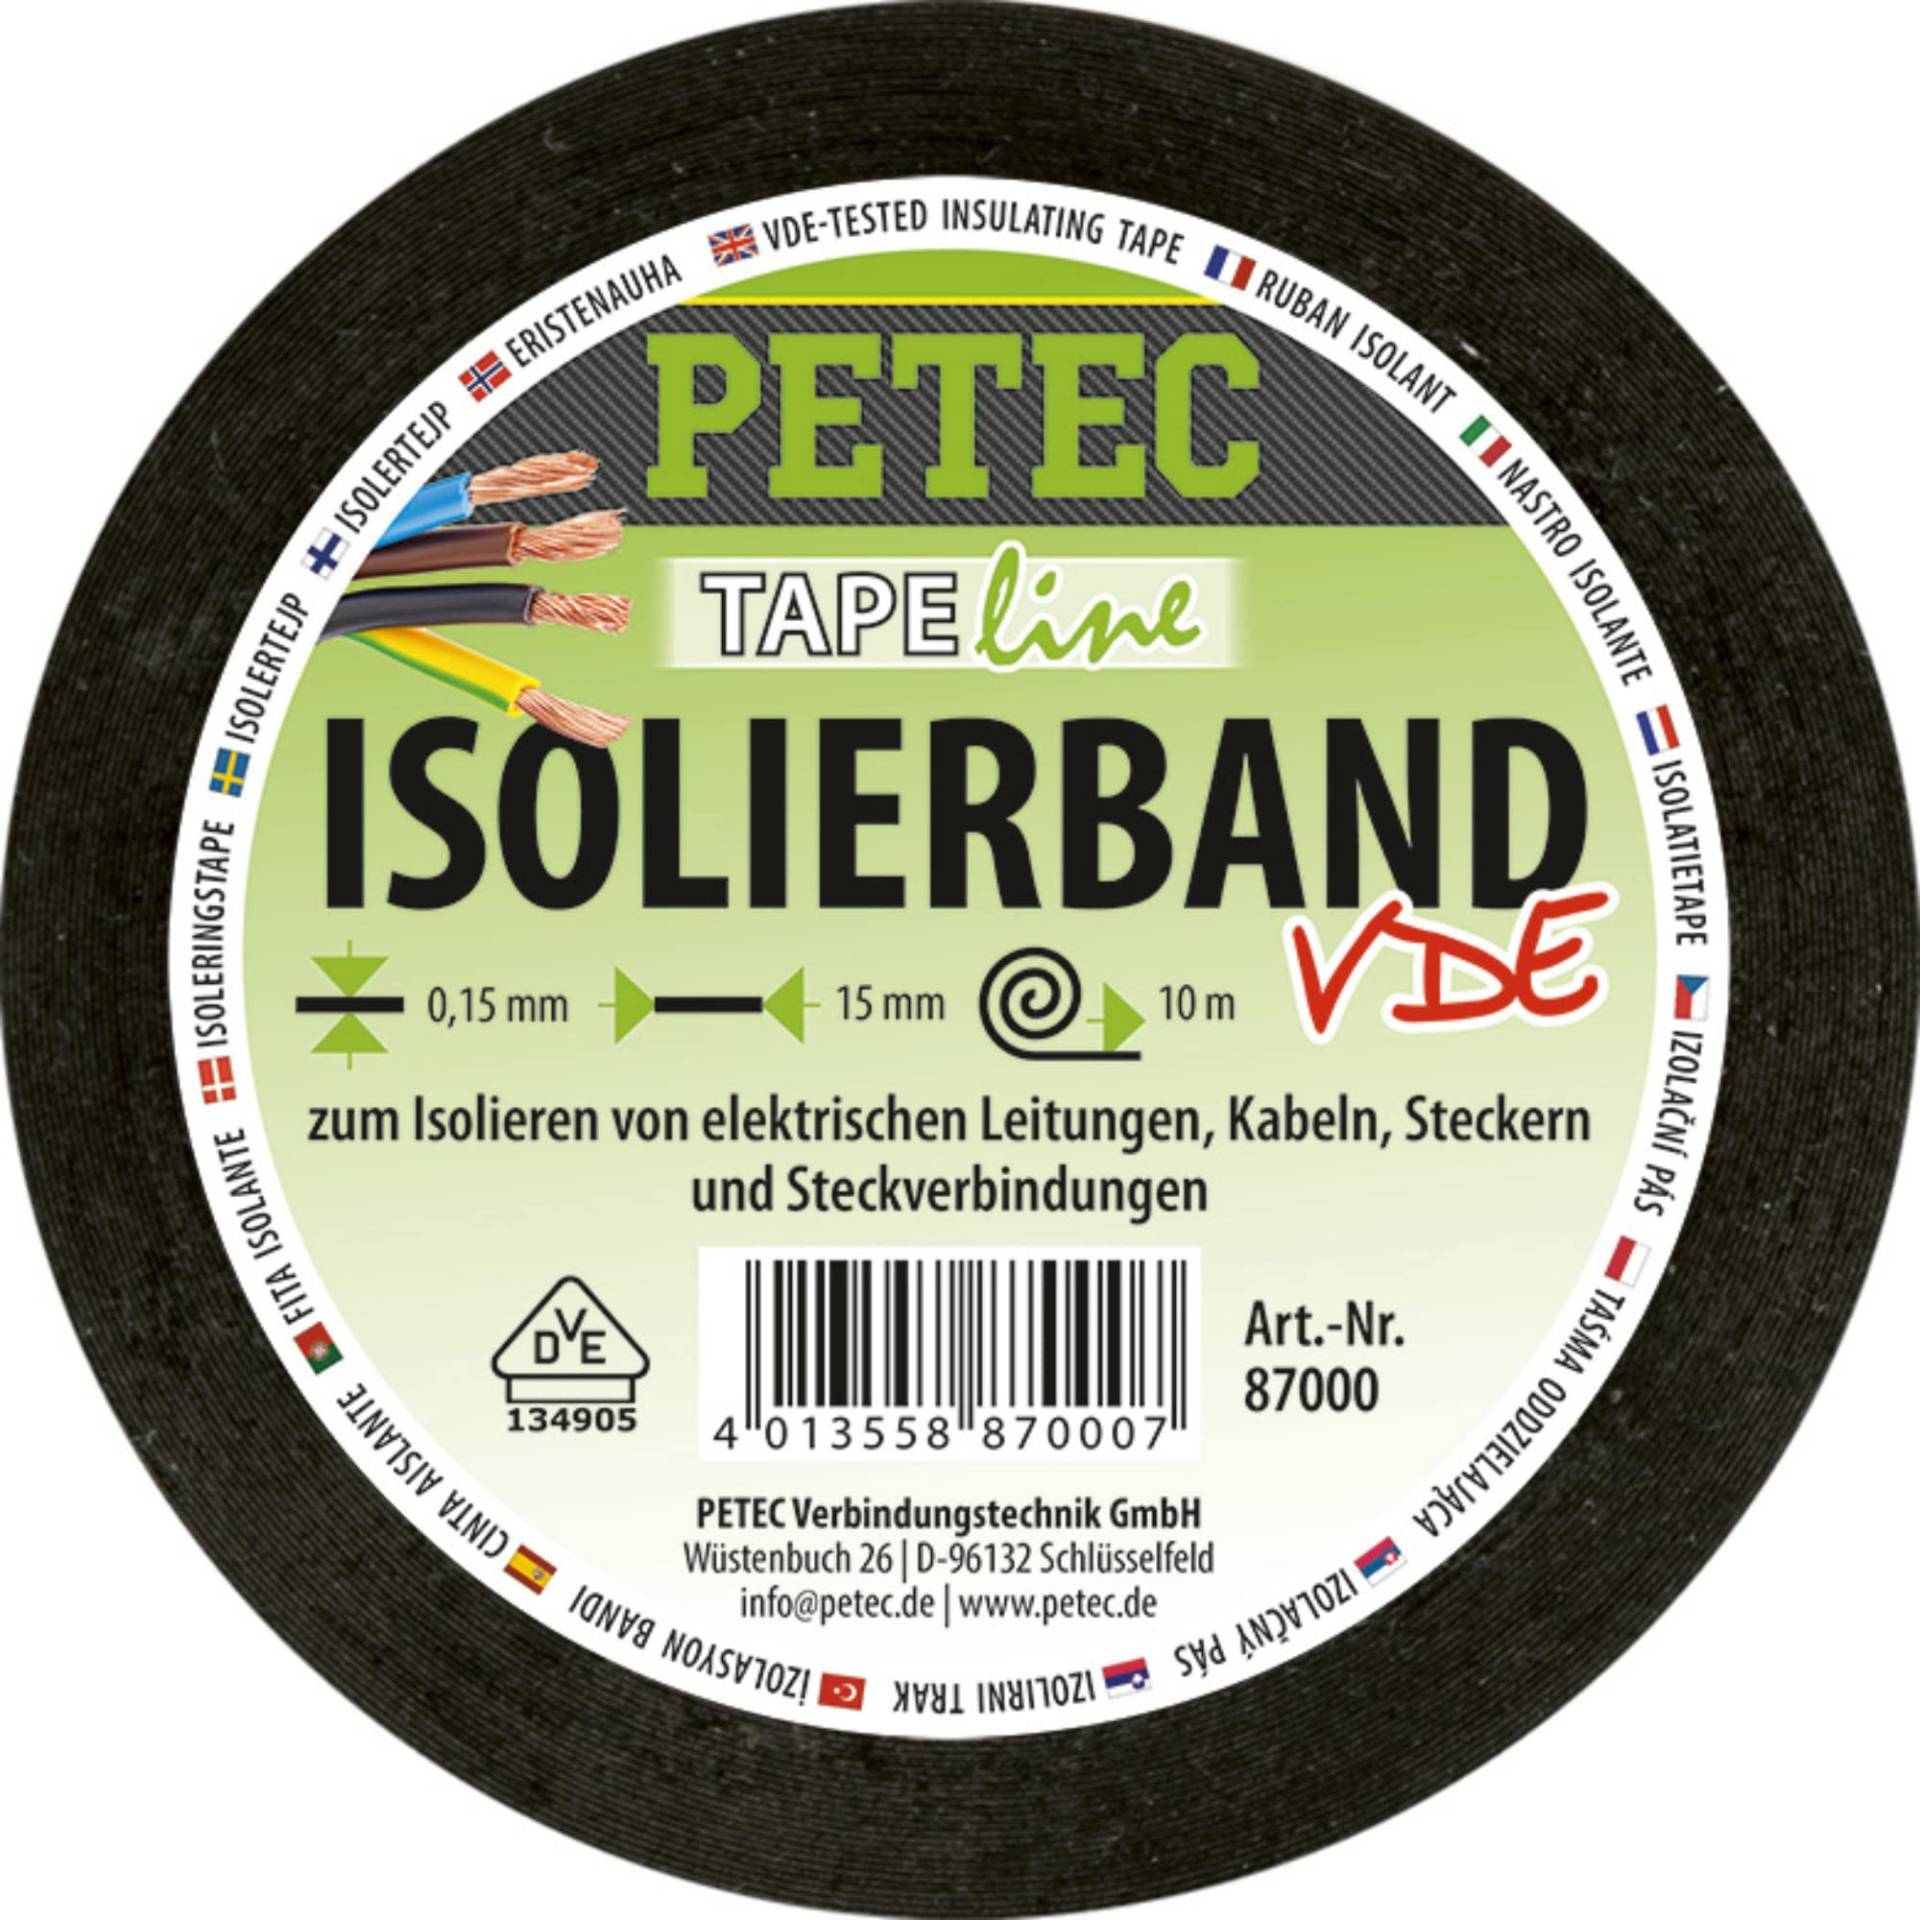 PETEC Isolierband 10mx15mmx0,15mm Rolle VDE geprüft Elektro-Isolierband schwarz, Selbstklebendes Iso Tape von PETEC